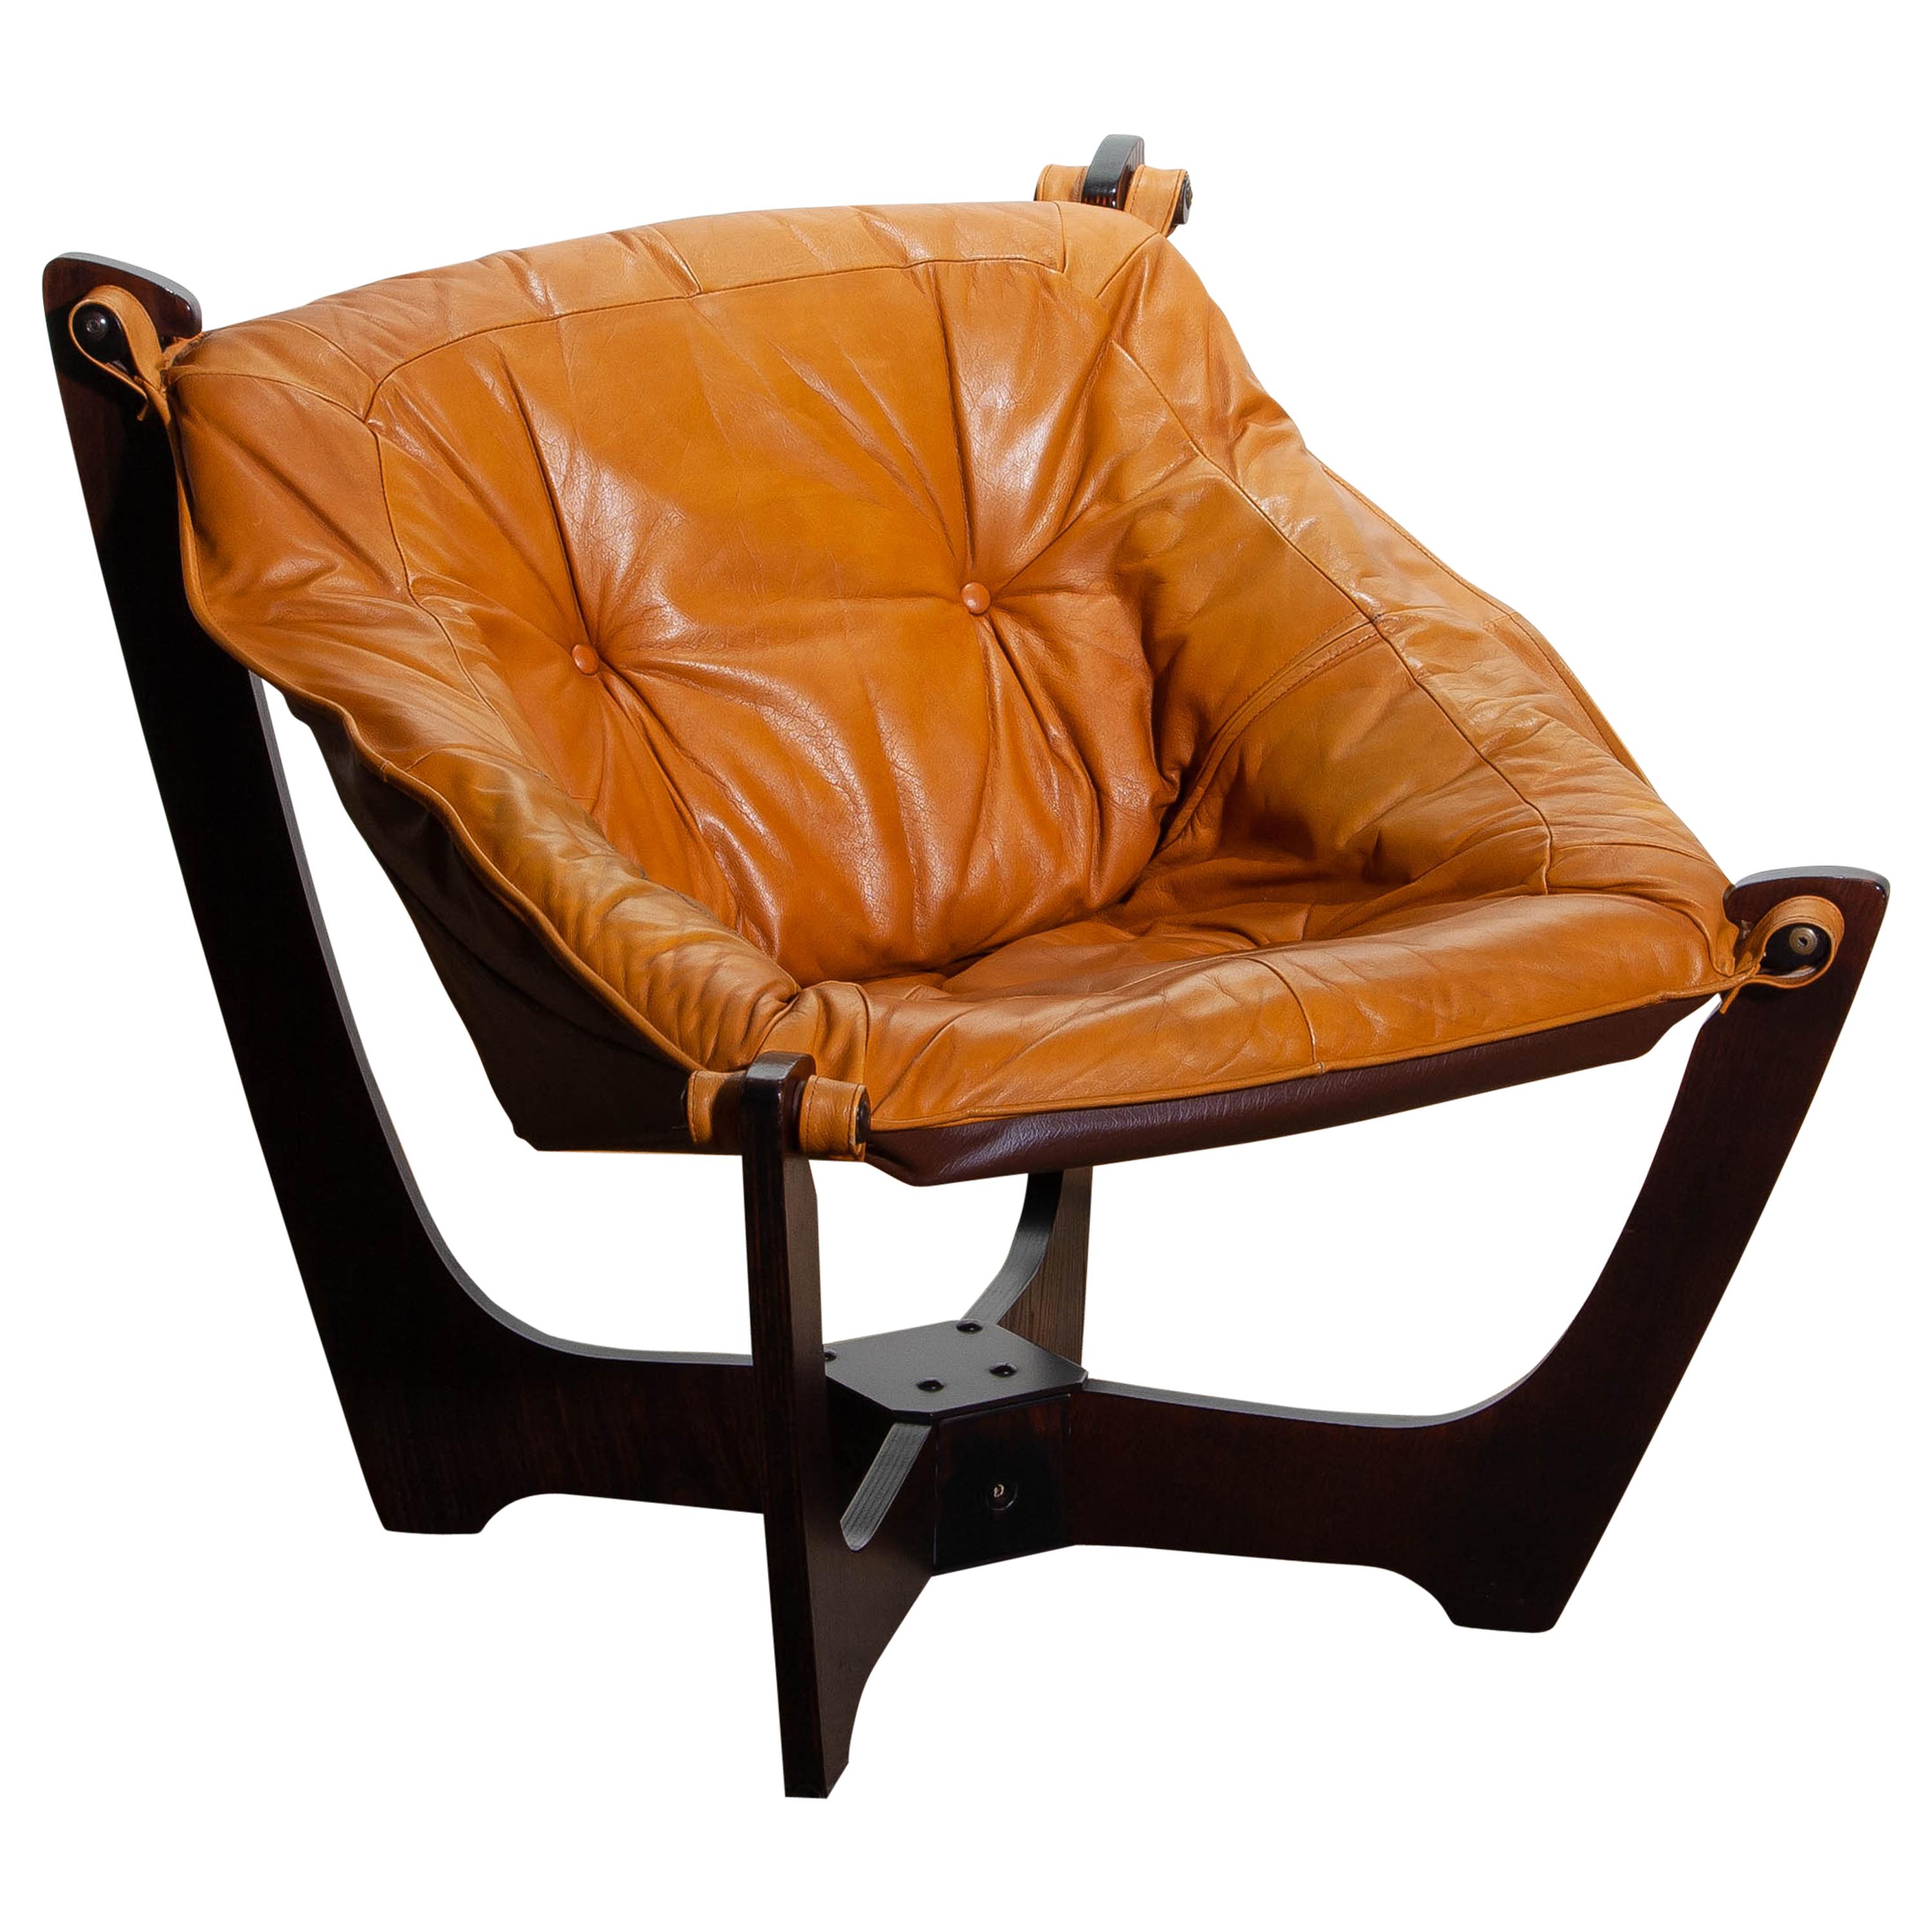 Mid-Century Modern 1970, Camel / Cognac Leather Lounge Chair by Odd Knutsen for Hjellegjerde Møbler